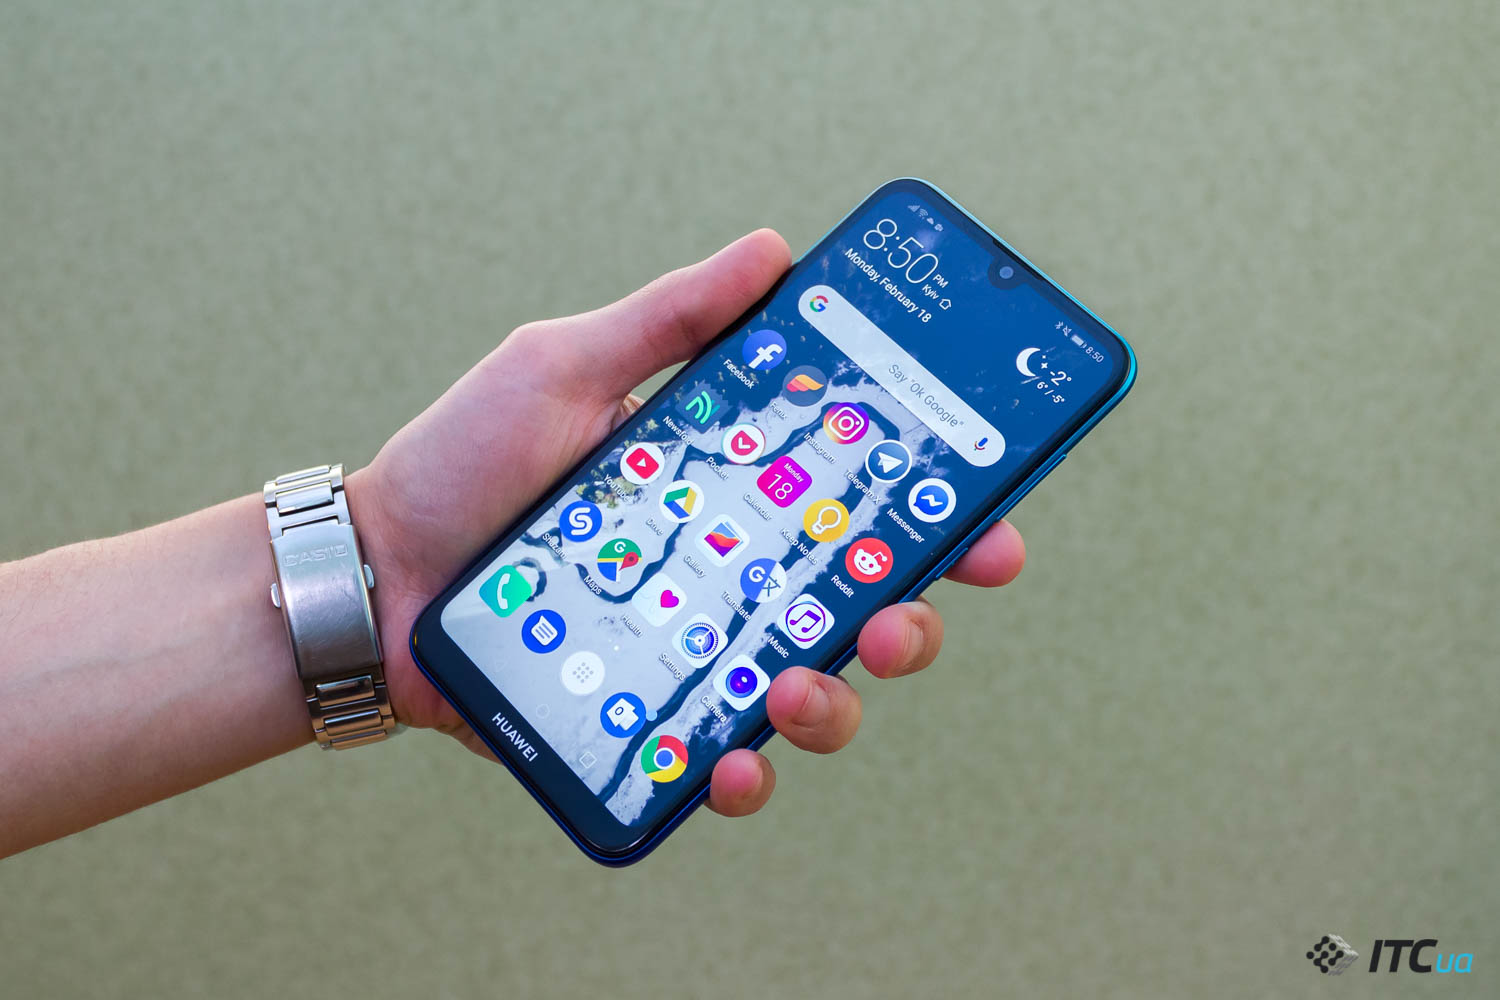 Y7 2019 — обзор смартфона Huawei